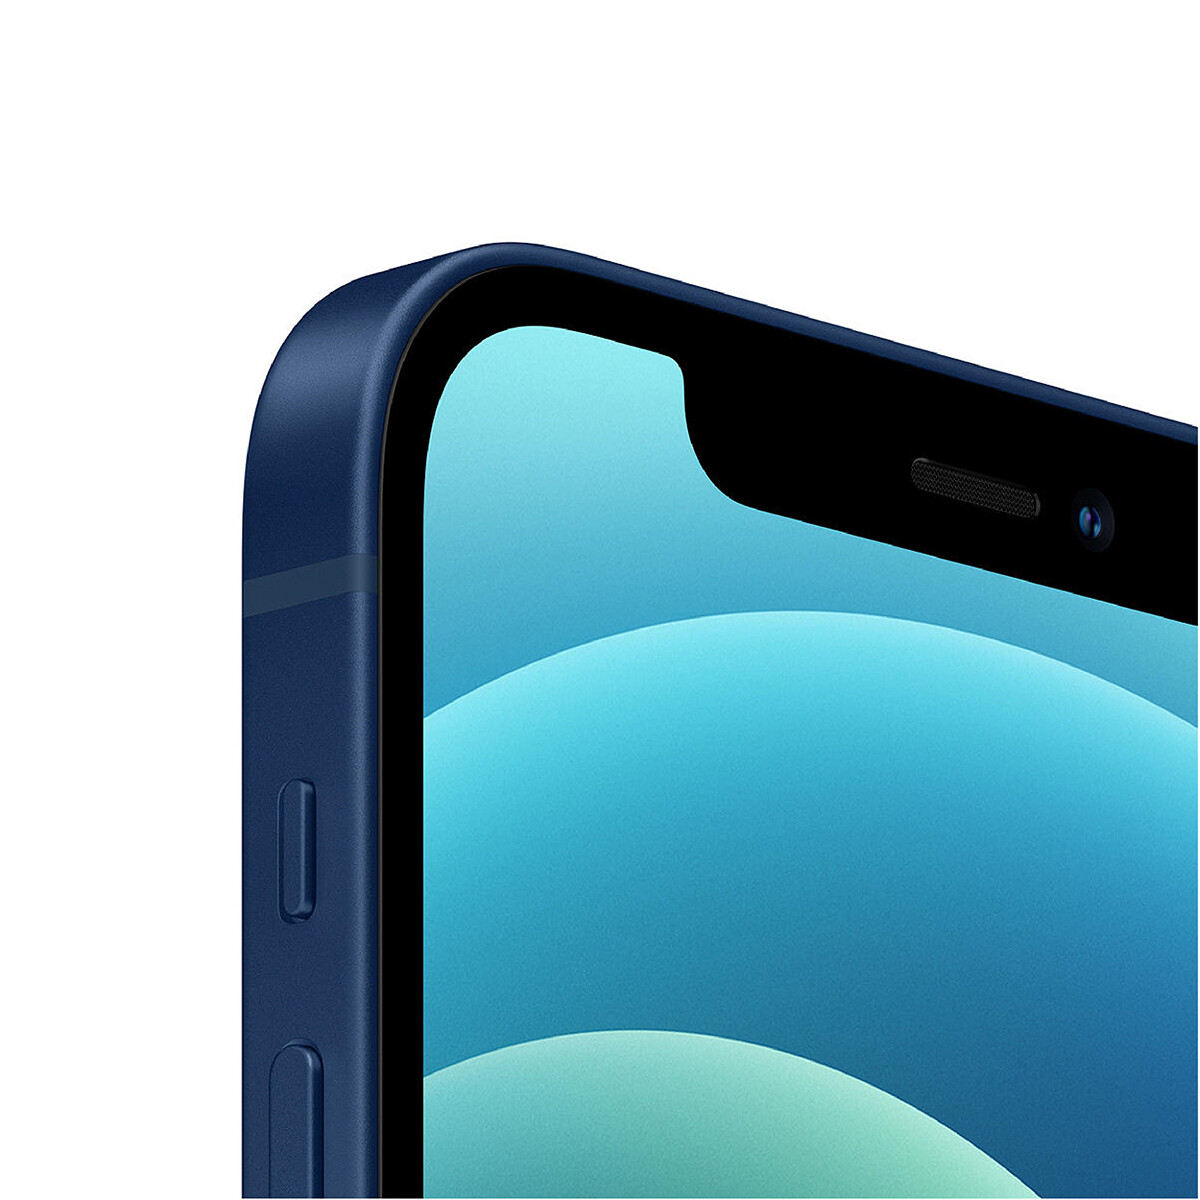 Iphone 12 64 gb Blue